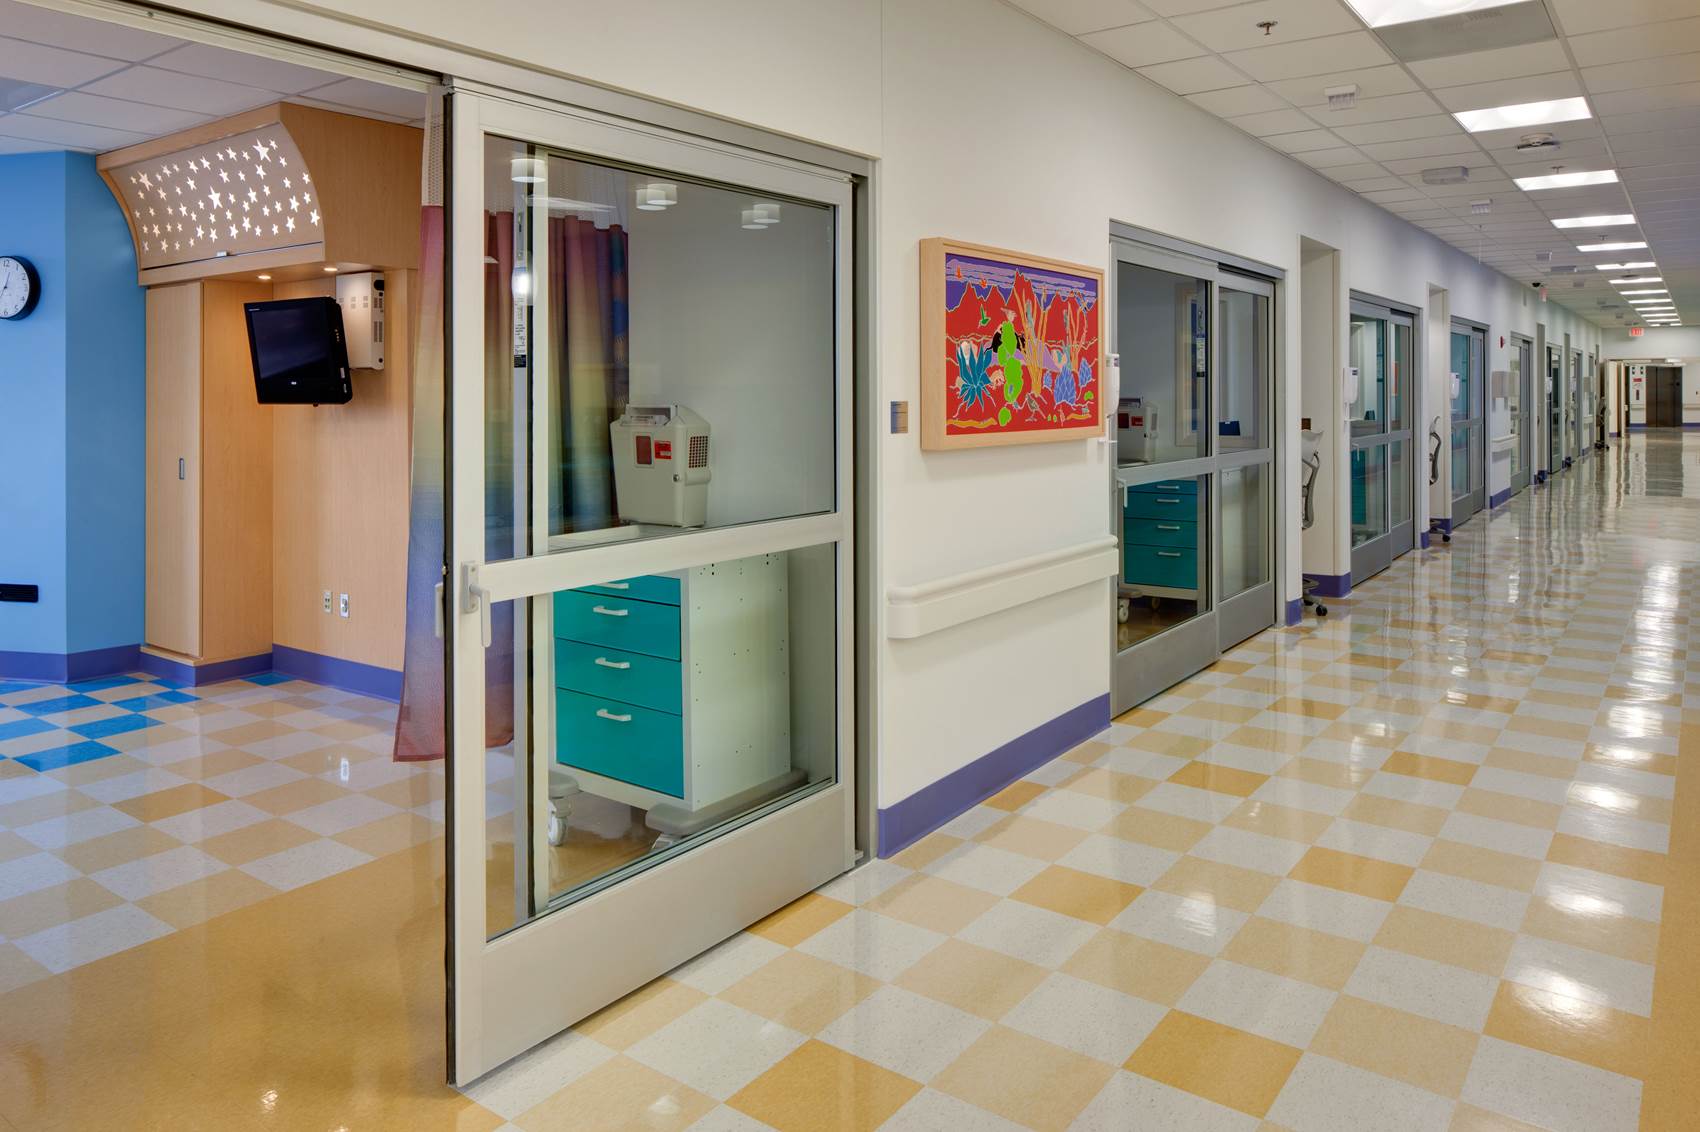 Children's Hospital at the University Medical Center of El Paso